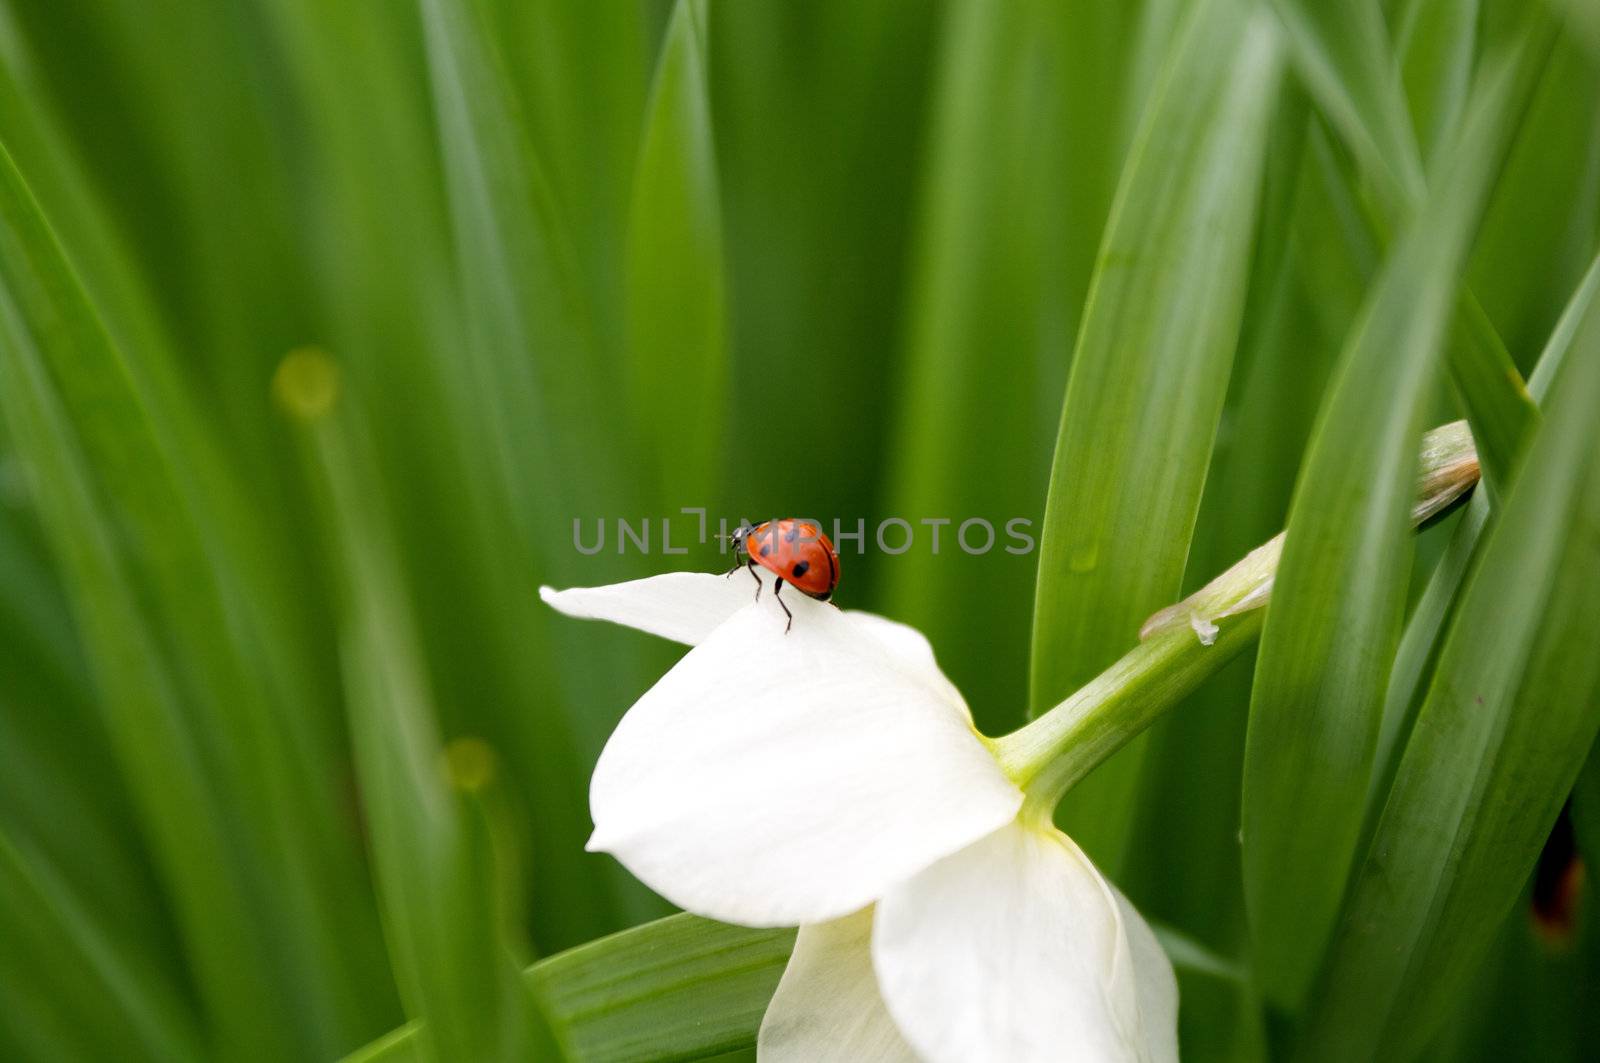 Ladybug on beautiful narcissus flower close up on green leaves background